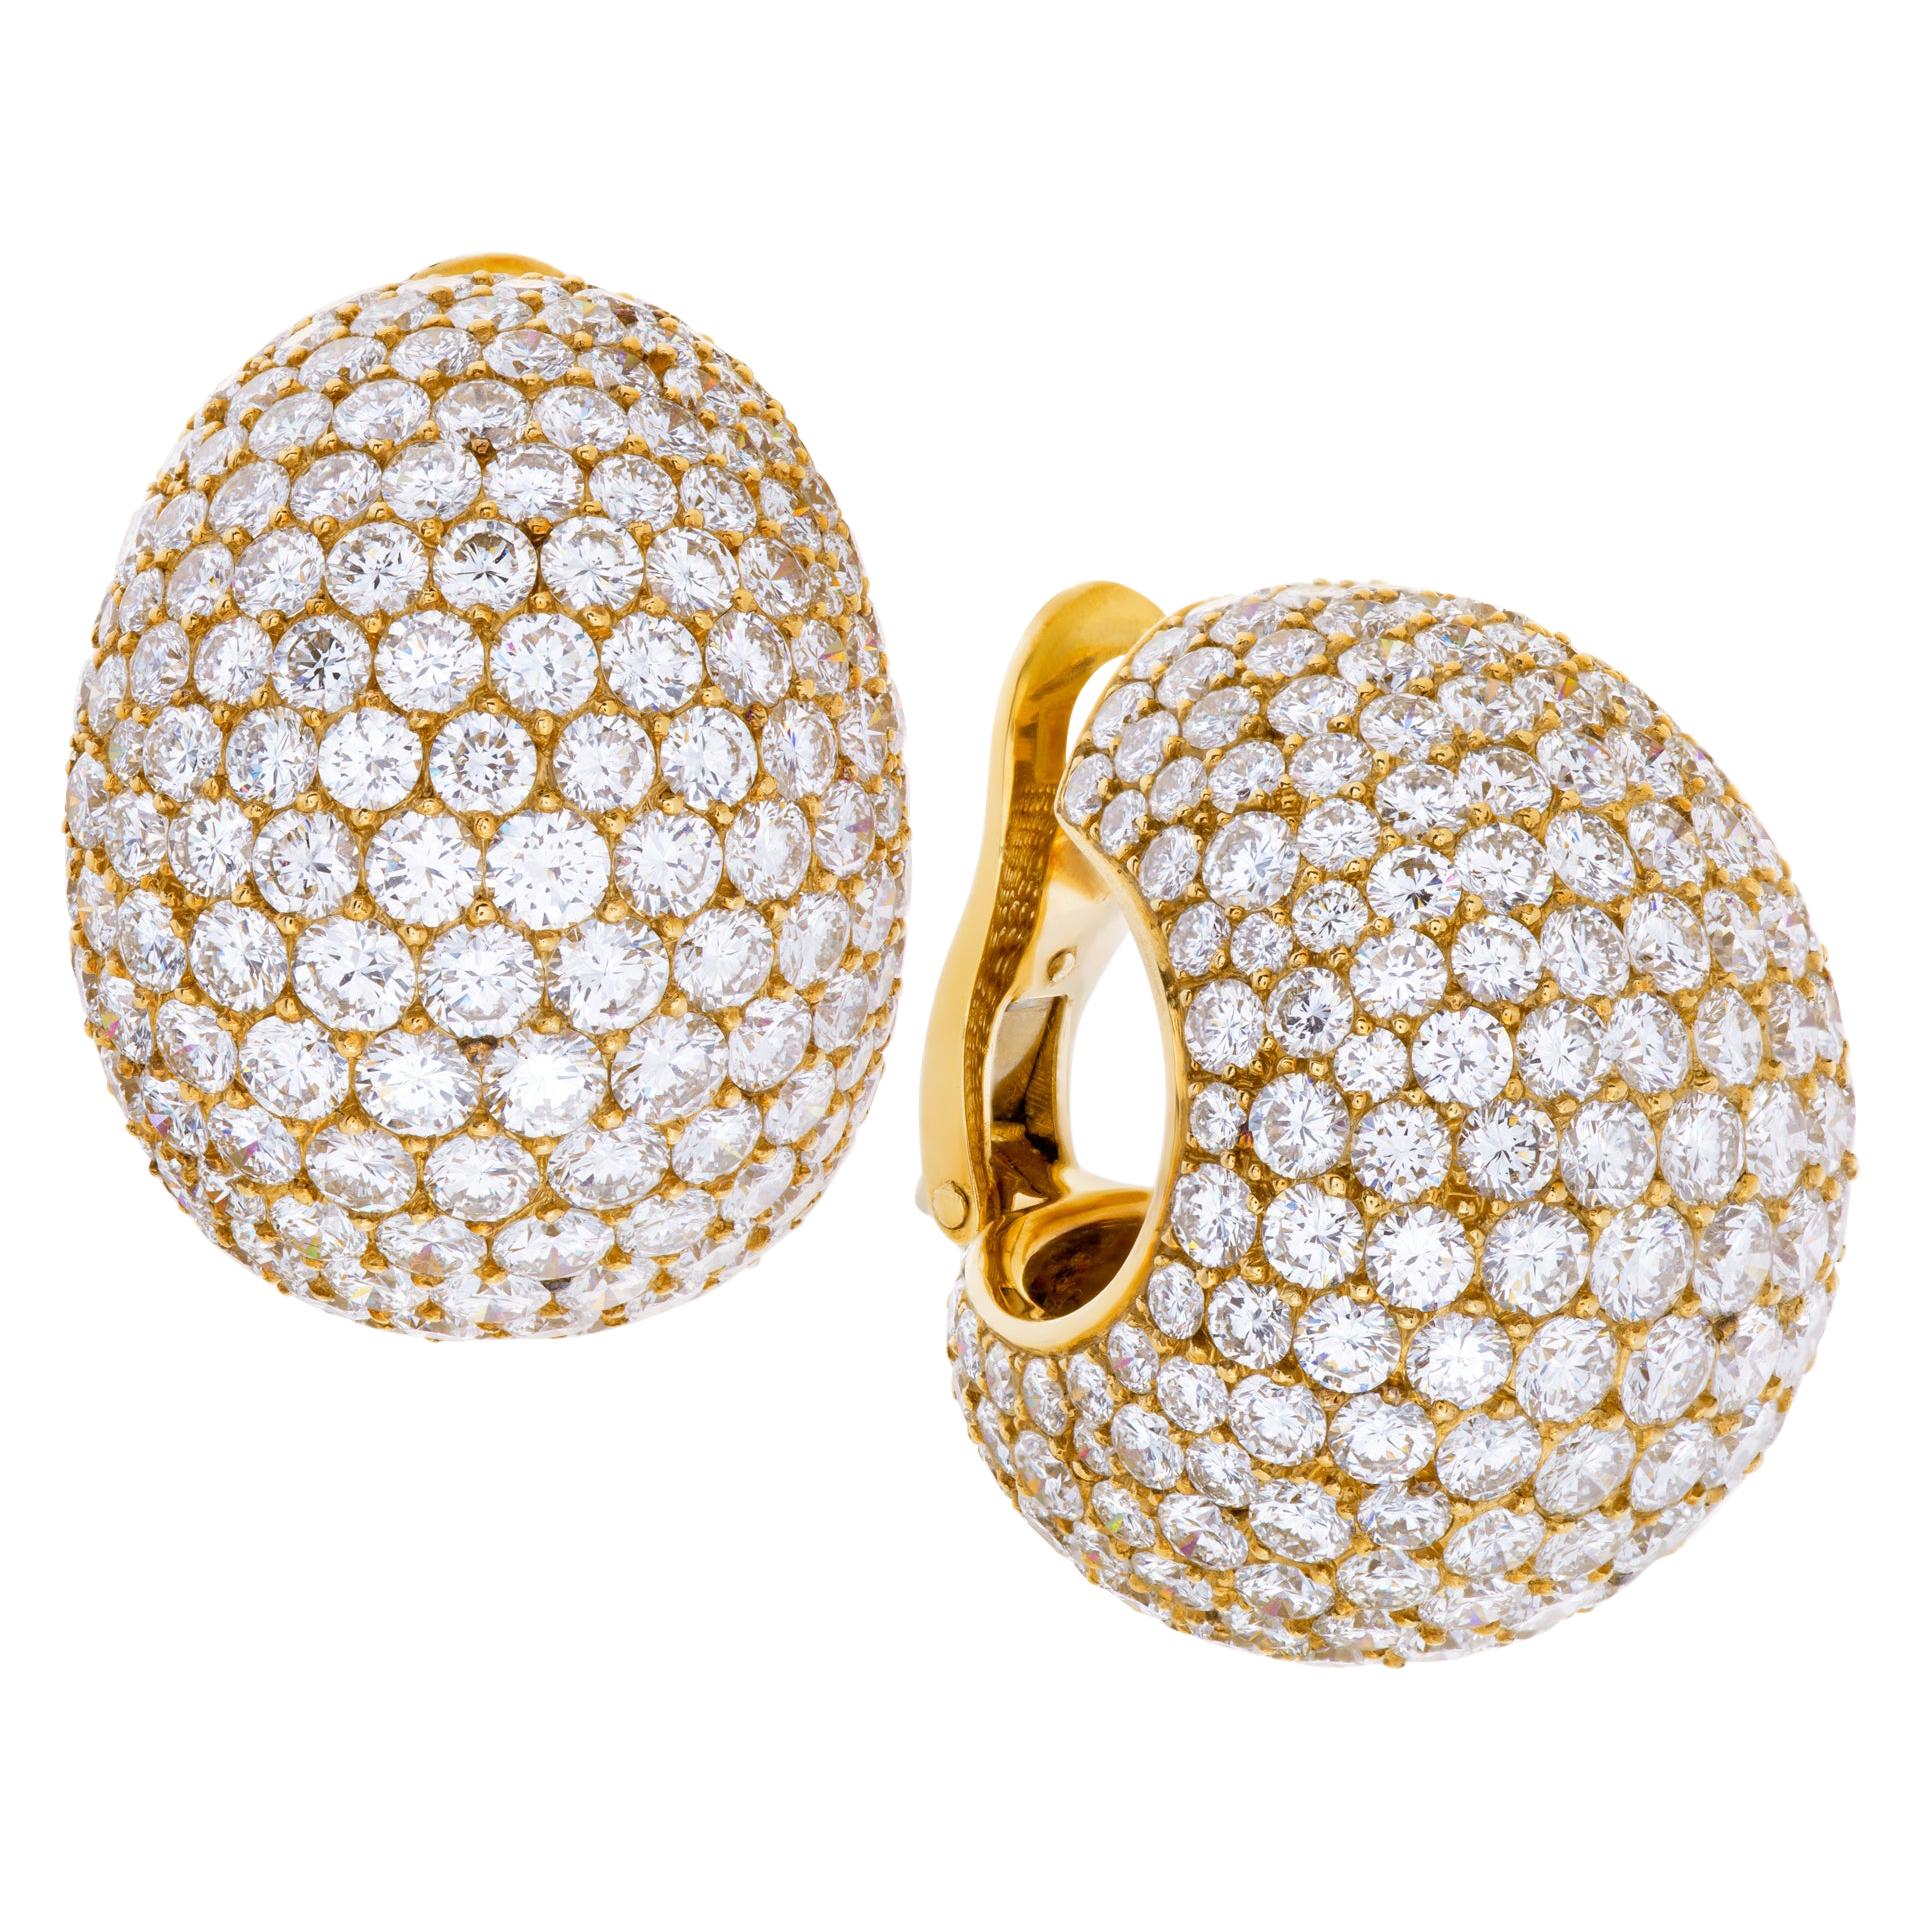 Cartier 18k Yellow Gold Diamonds "Bombe" Ear Clips